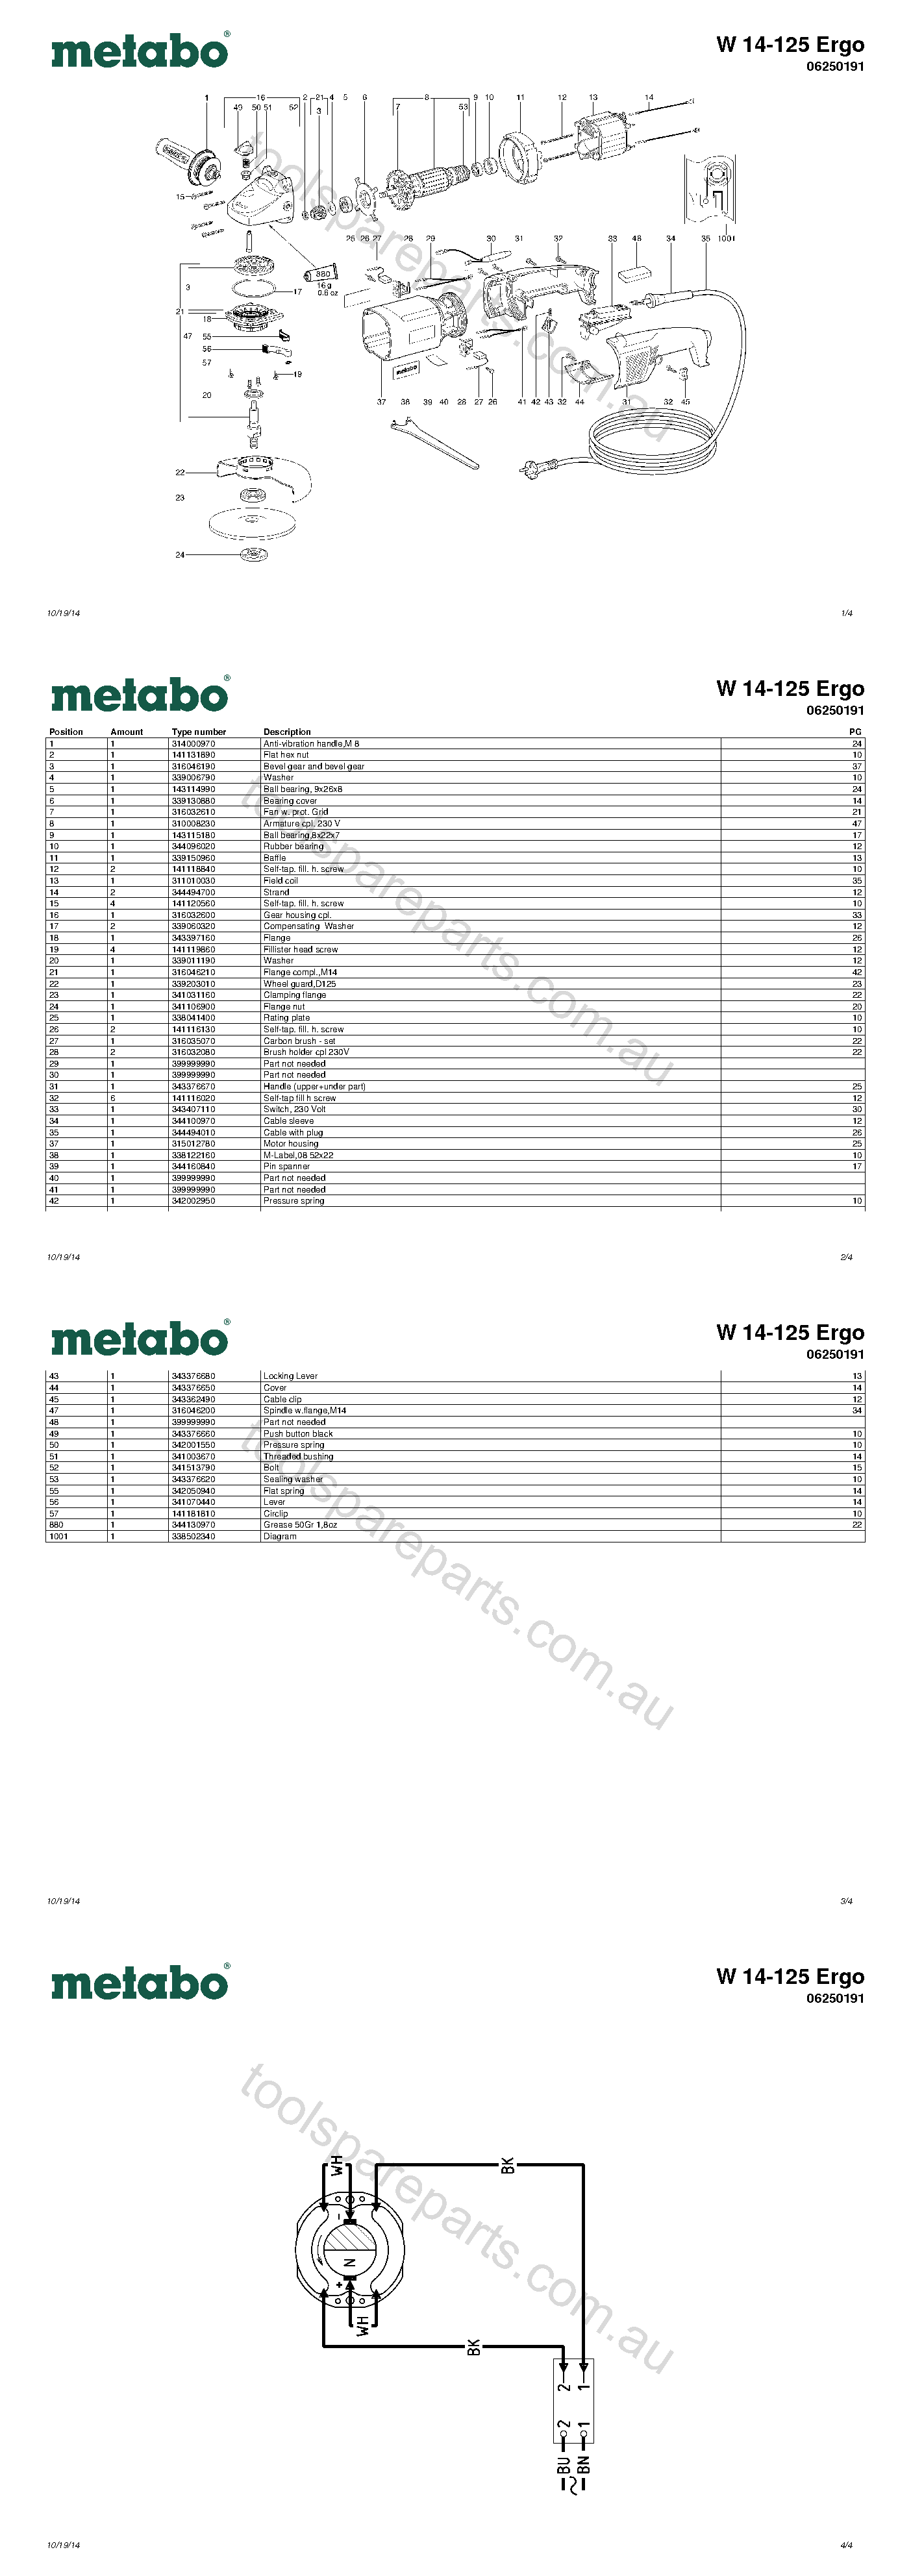 Metabo W 14-125 Ergo 06250191  Diagram 1